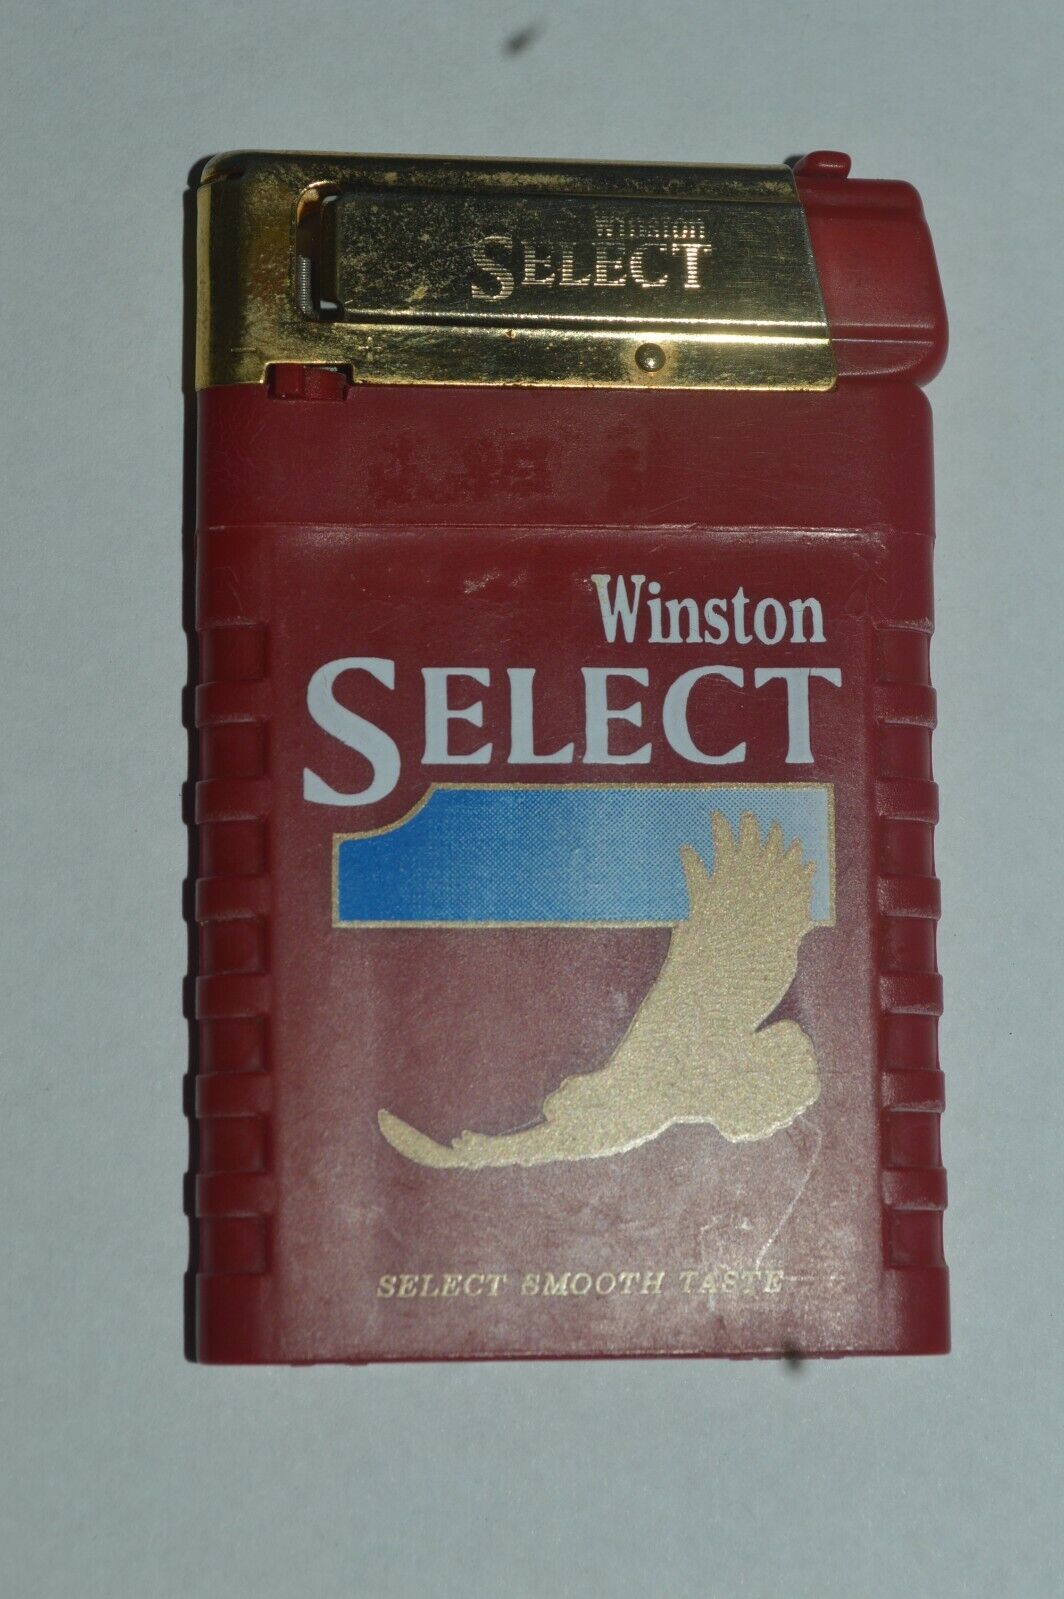 Lighter Winston Select Cigarettes Promotional Quartz Childproof Refillable Works